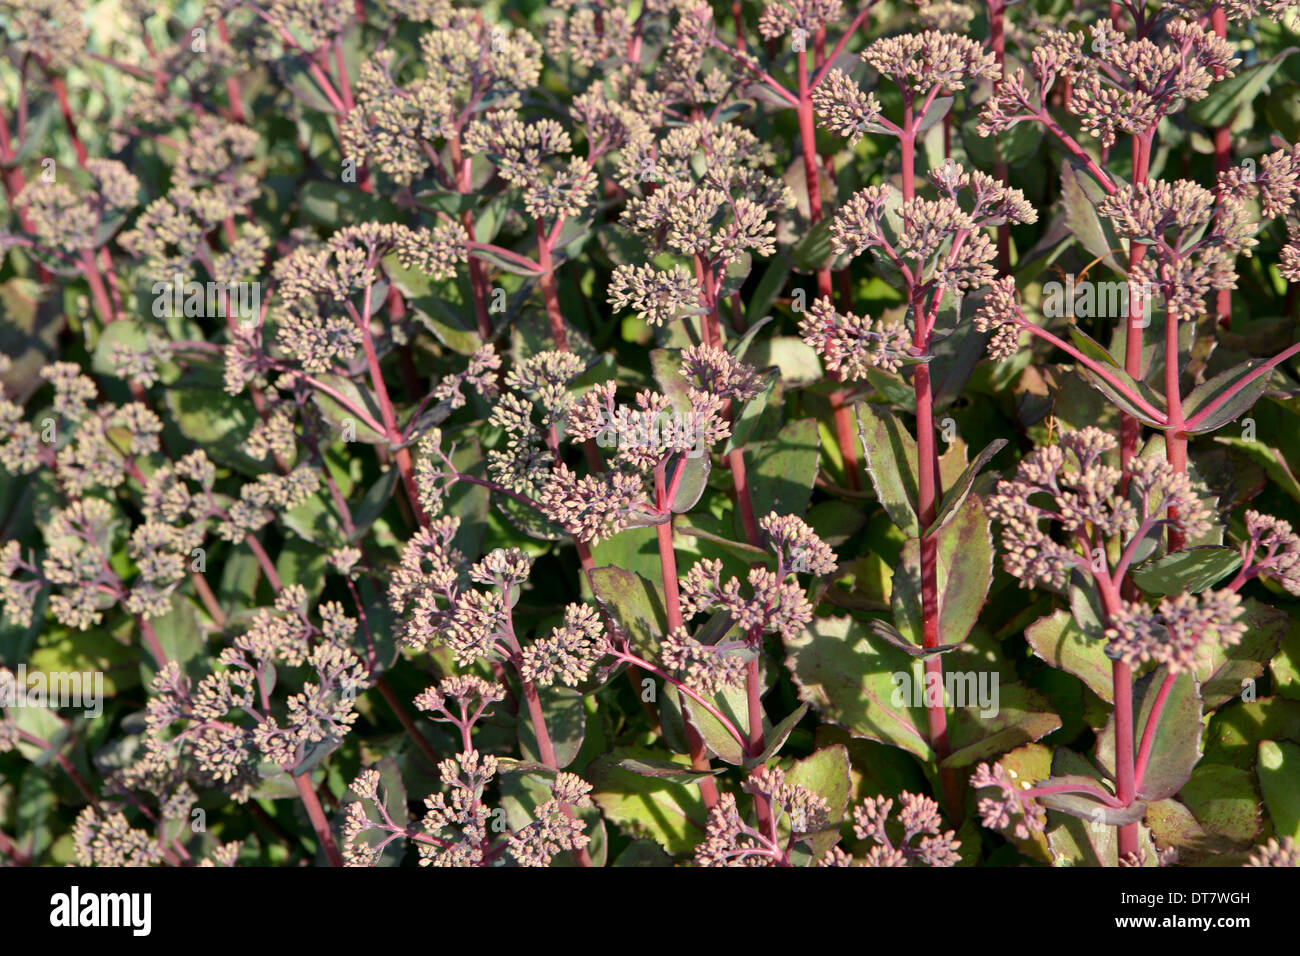 Hylotelephium 'Matrona' / Sedum 'Matrona', stonecrop - dense clusters of pale pink flowers, large, ovate grey-green leaves tinged purple Stock Photo